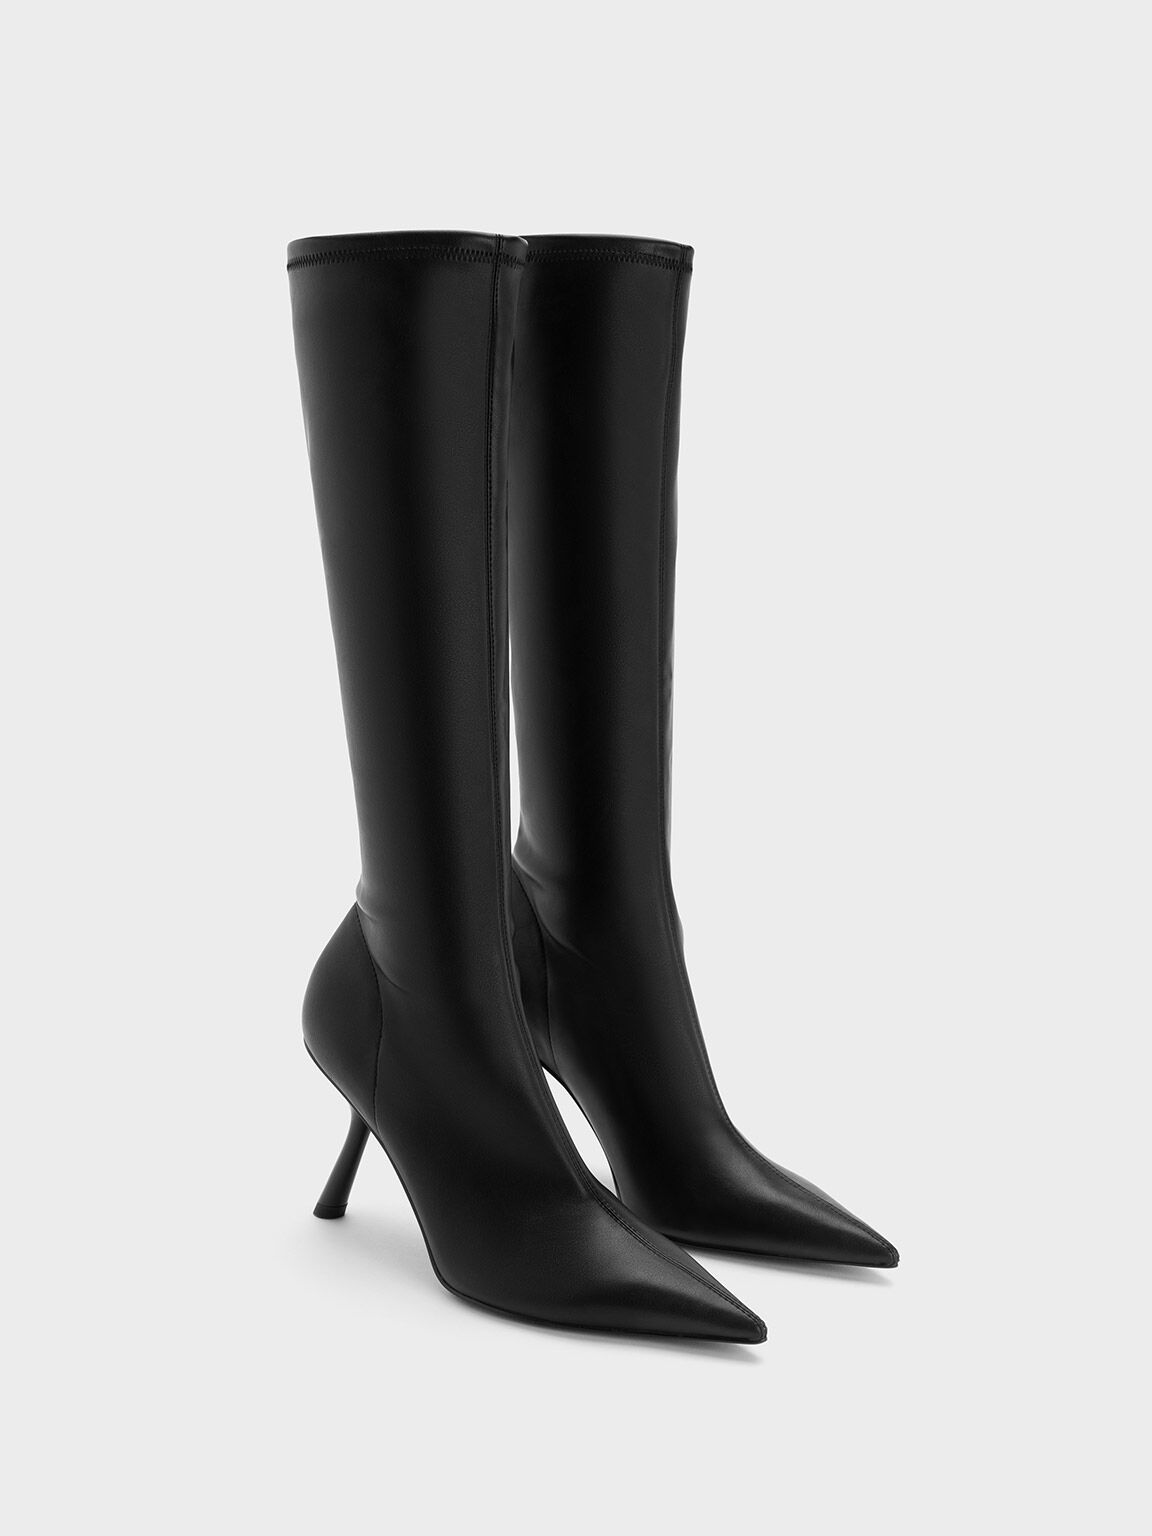 Geri Black Leather Over The Knee Buckle Boots Spike Heels … | Flickr